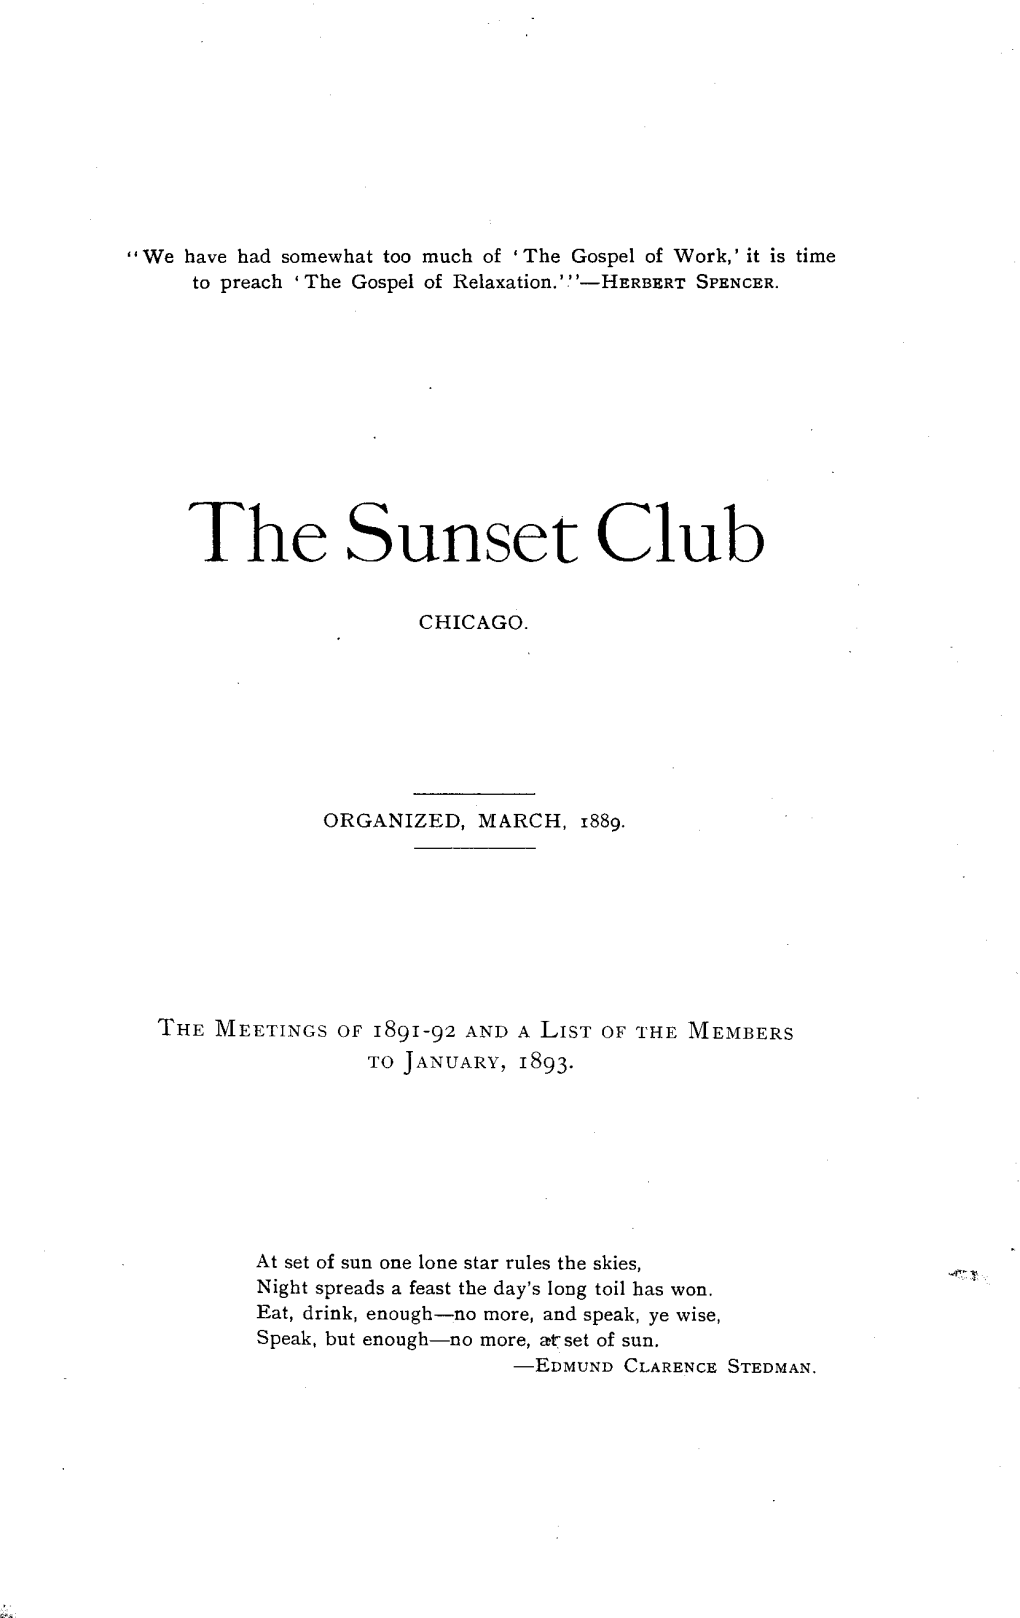 The Sunset Club